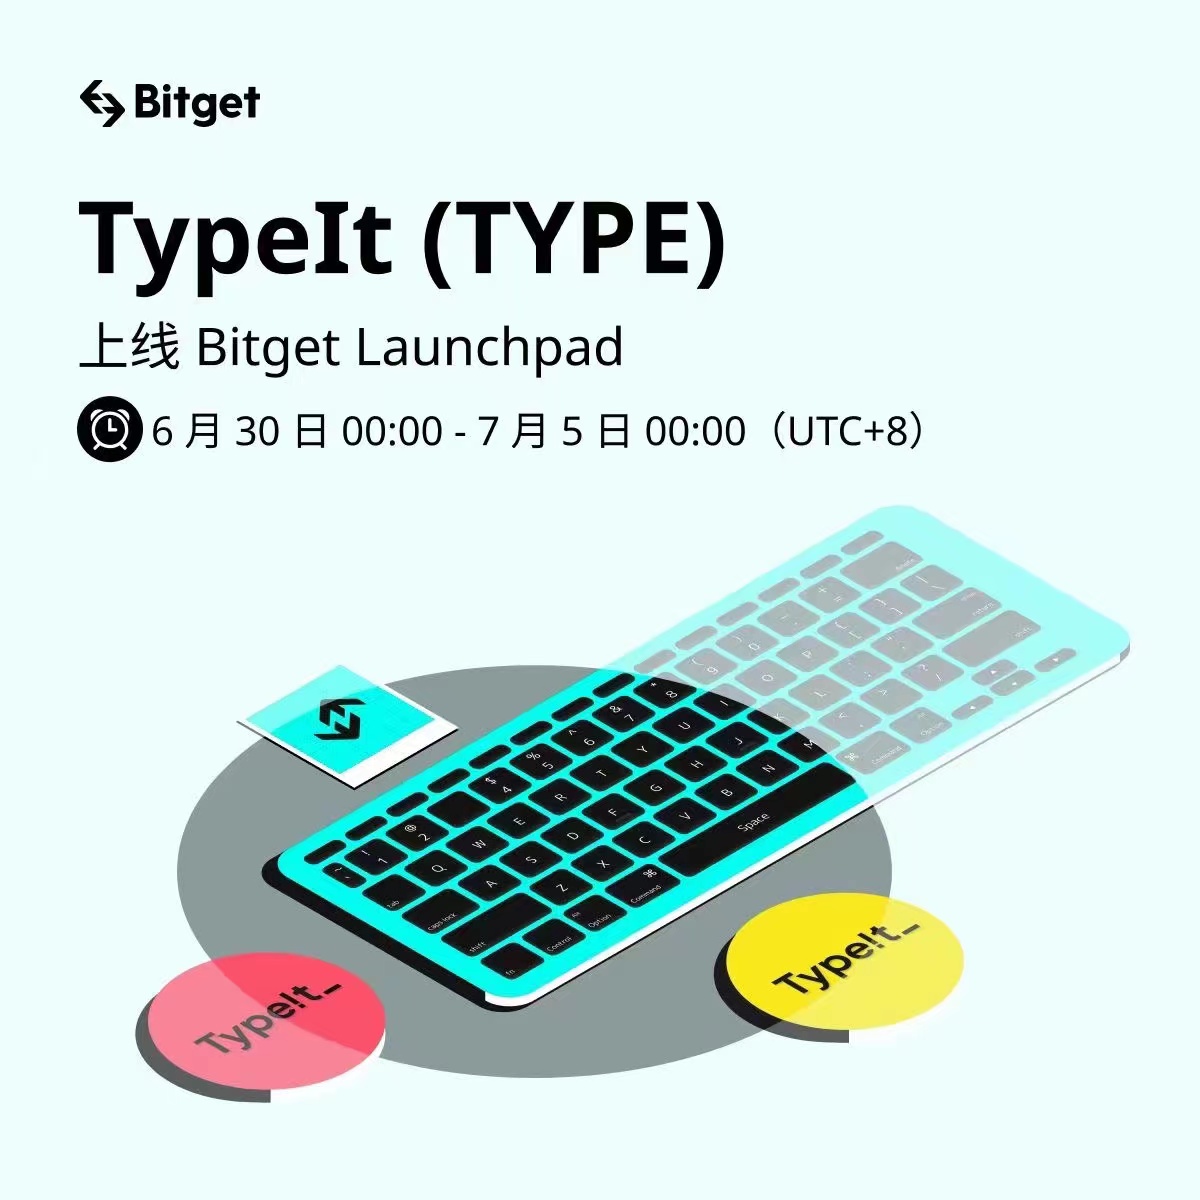 Bitget打新(TYPE)，支持一波
关注 @bitgetglobal  @tiffanyLiubg 并转推
抽5人X5U     7月7号开奖

Launchpad具体规则:
bitgetapp.com/zh-CN/support/…

Bitget注册链接：partner.bitget.online/bg/J3RYH7